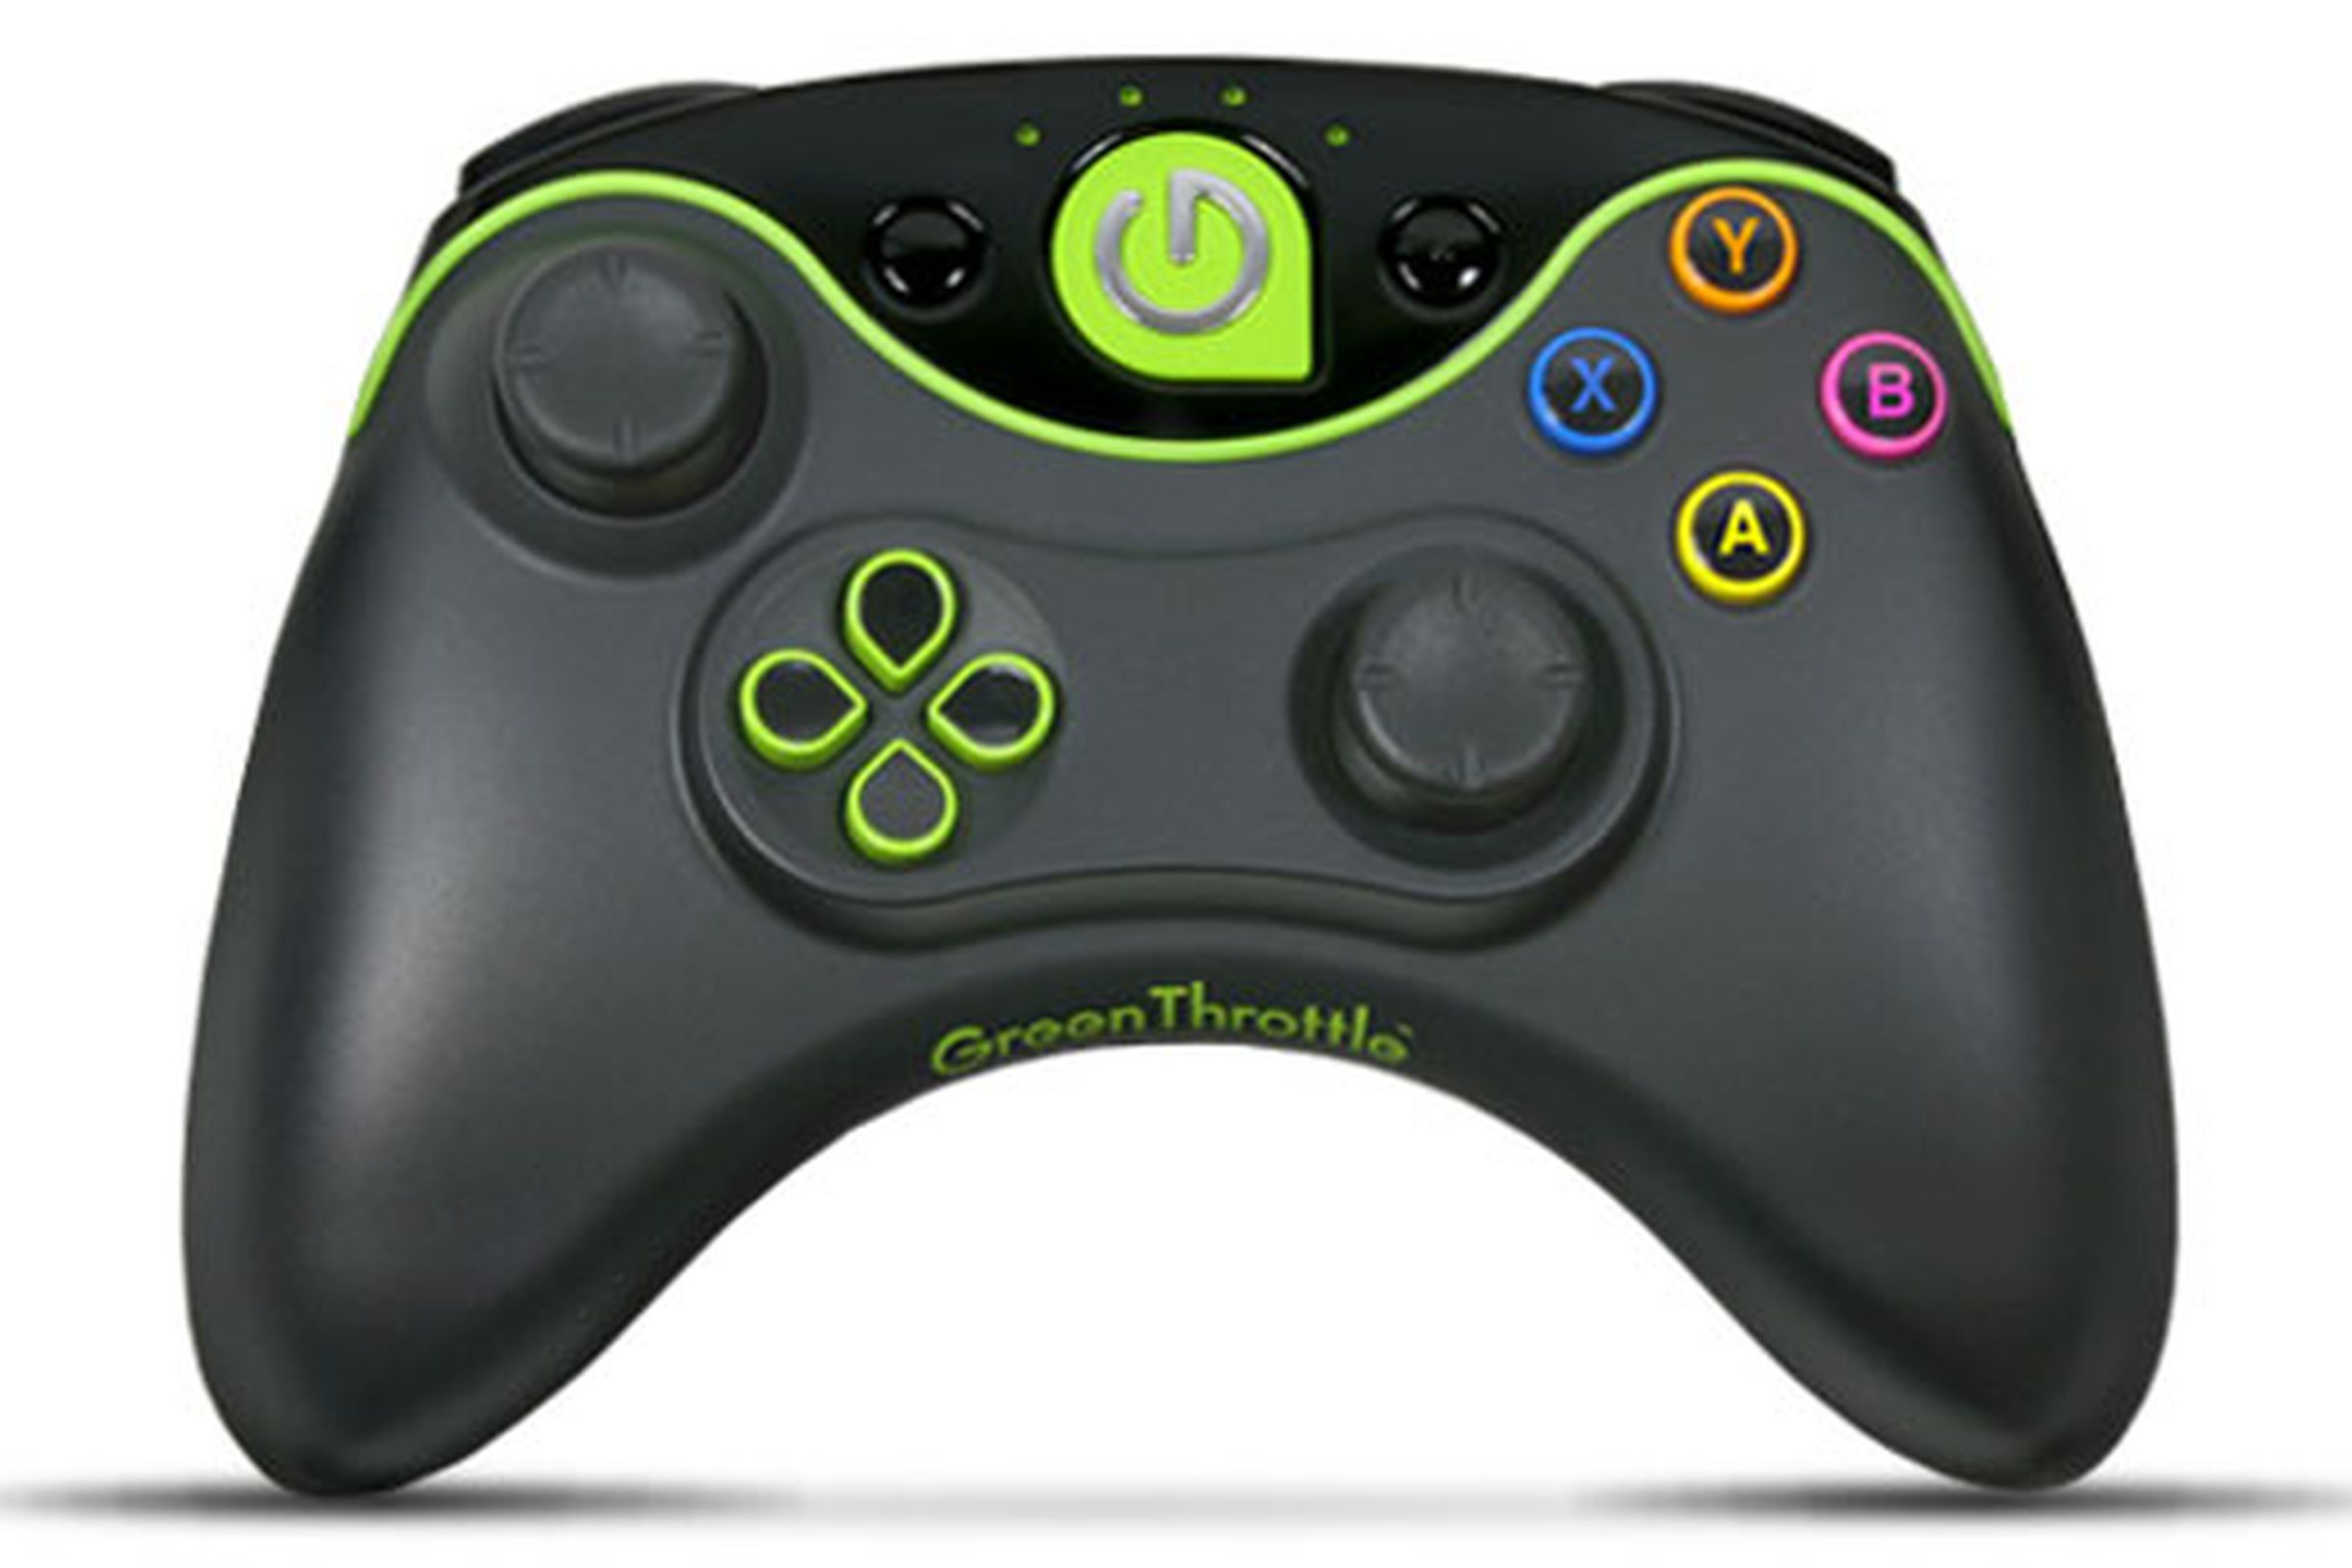 green throttle games controller